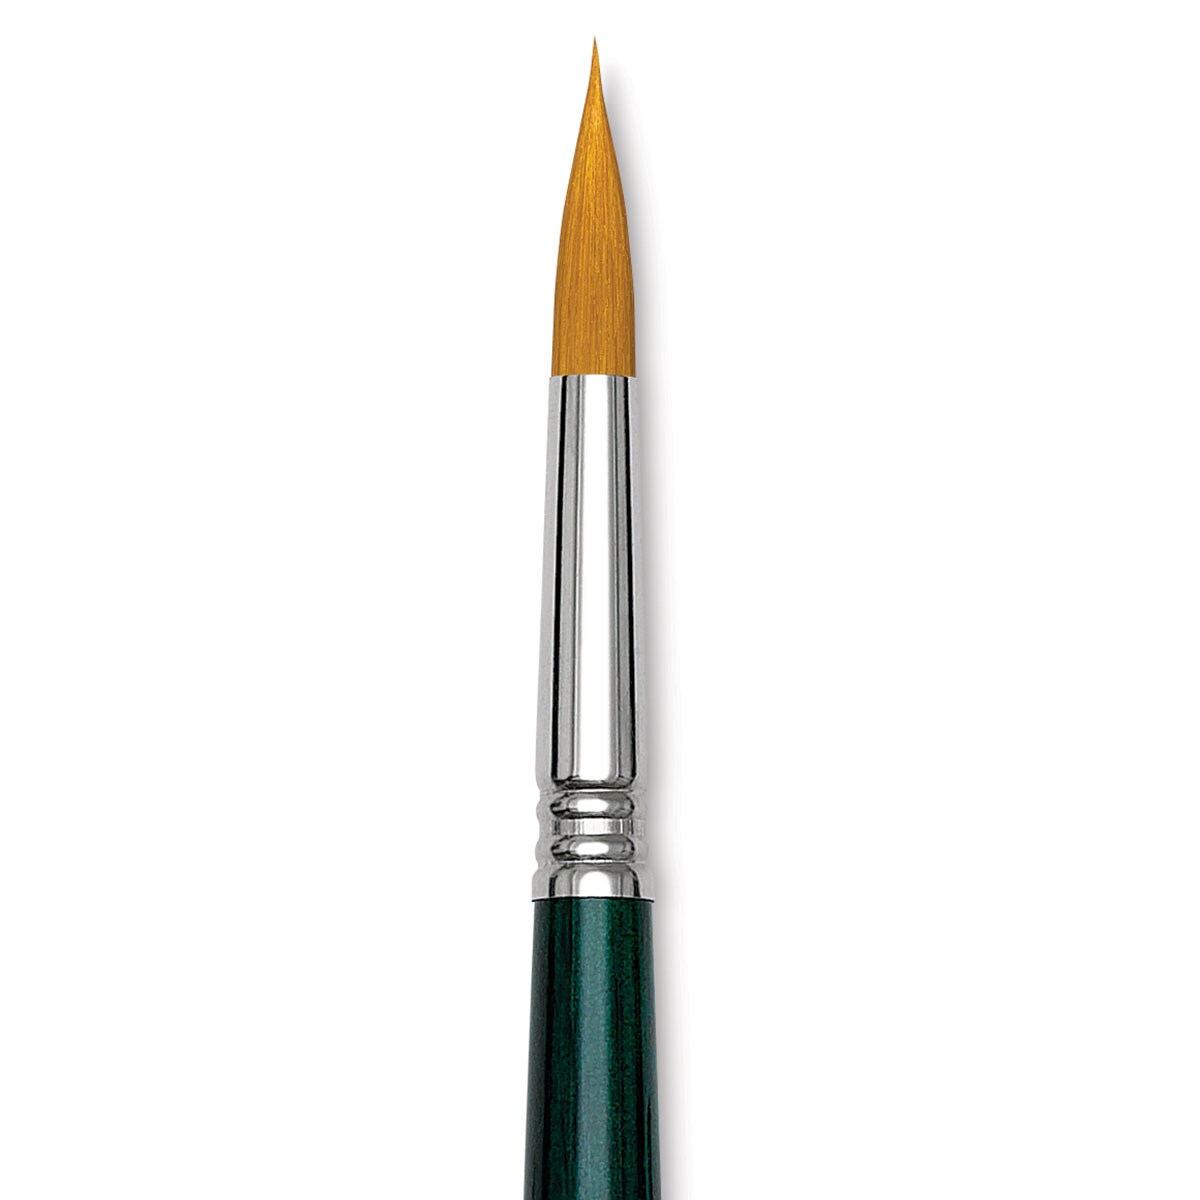 Escoda Barroco Toray Gold Synthetic Brush - Round, Long Handle, Size 14